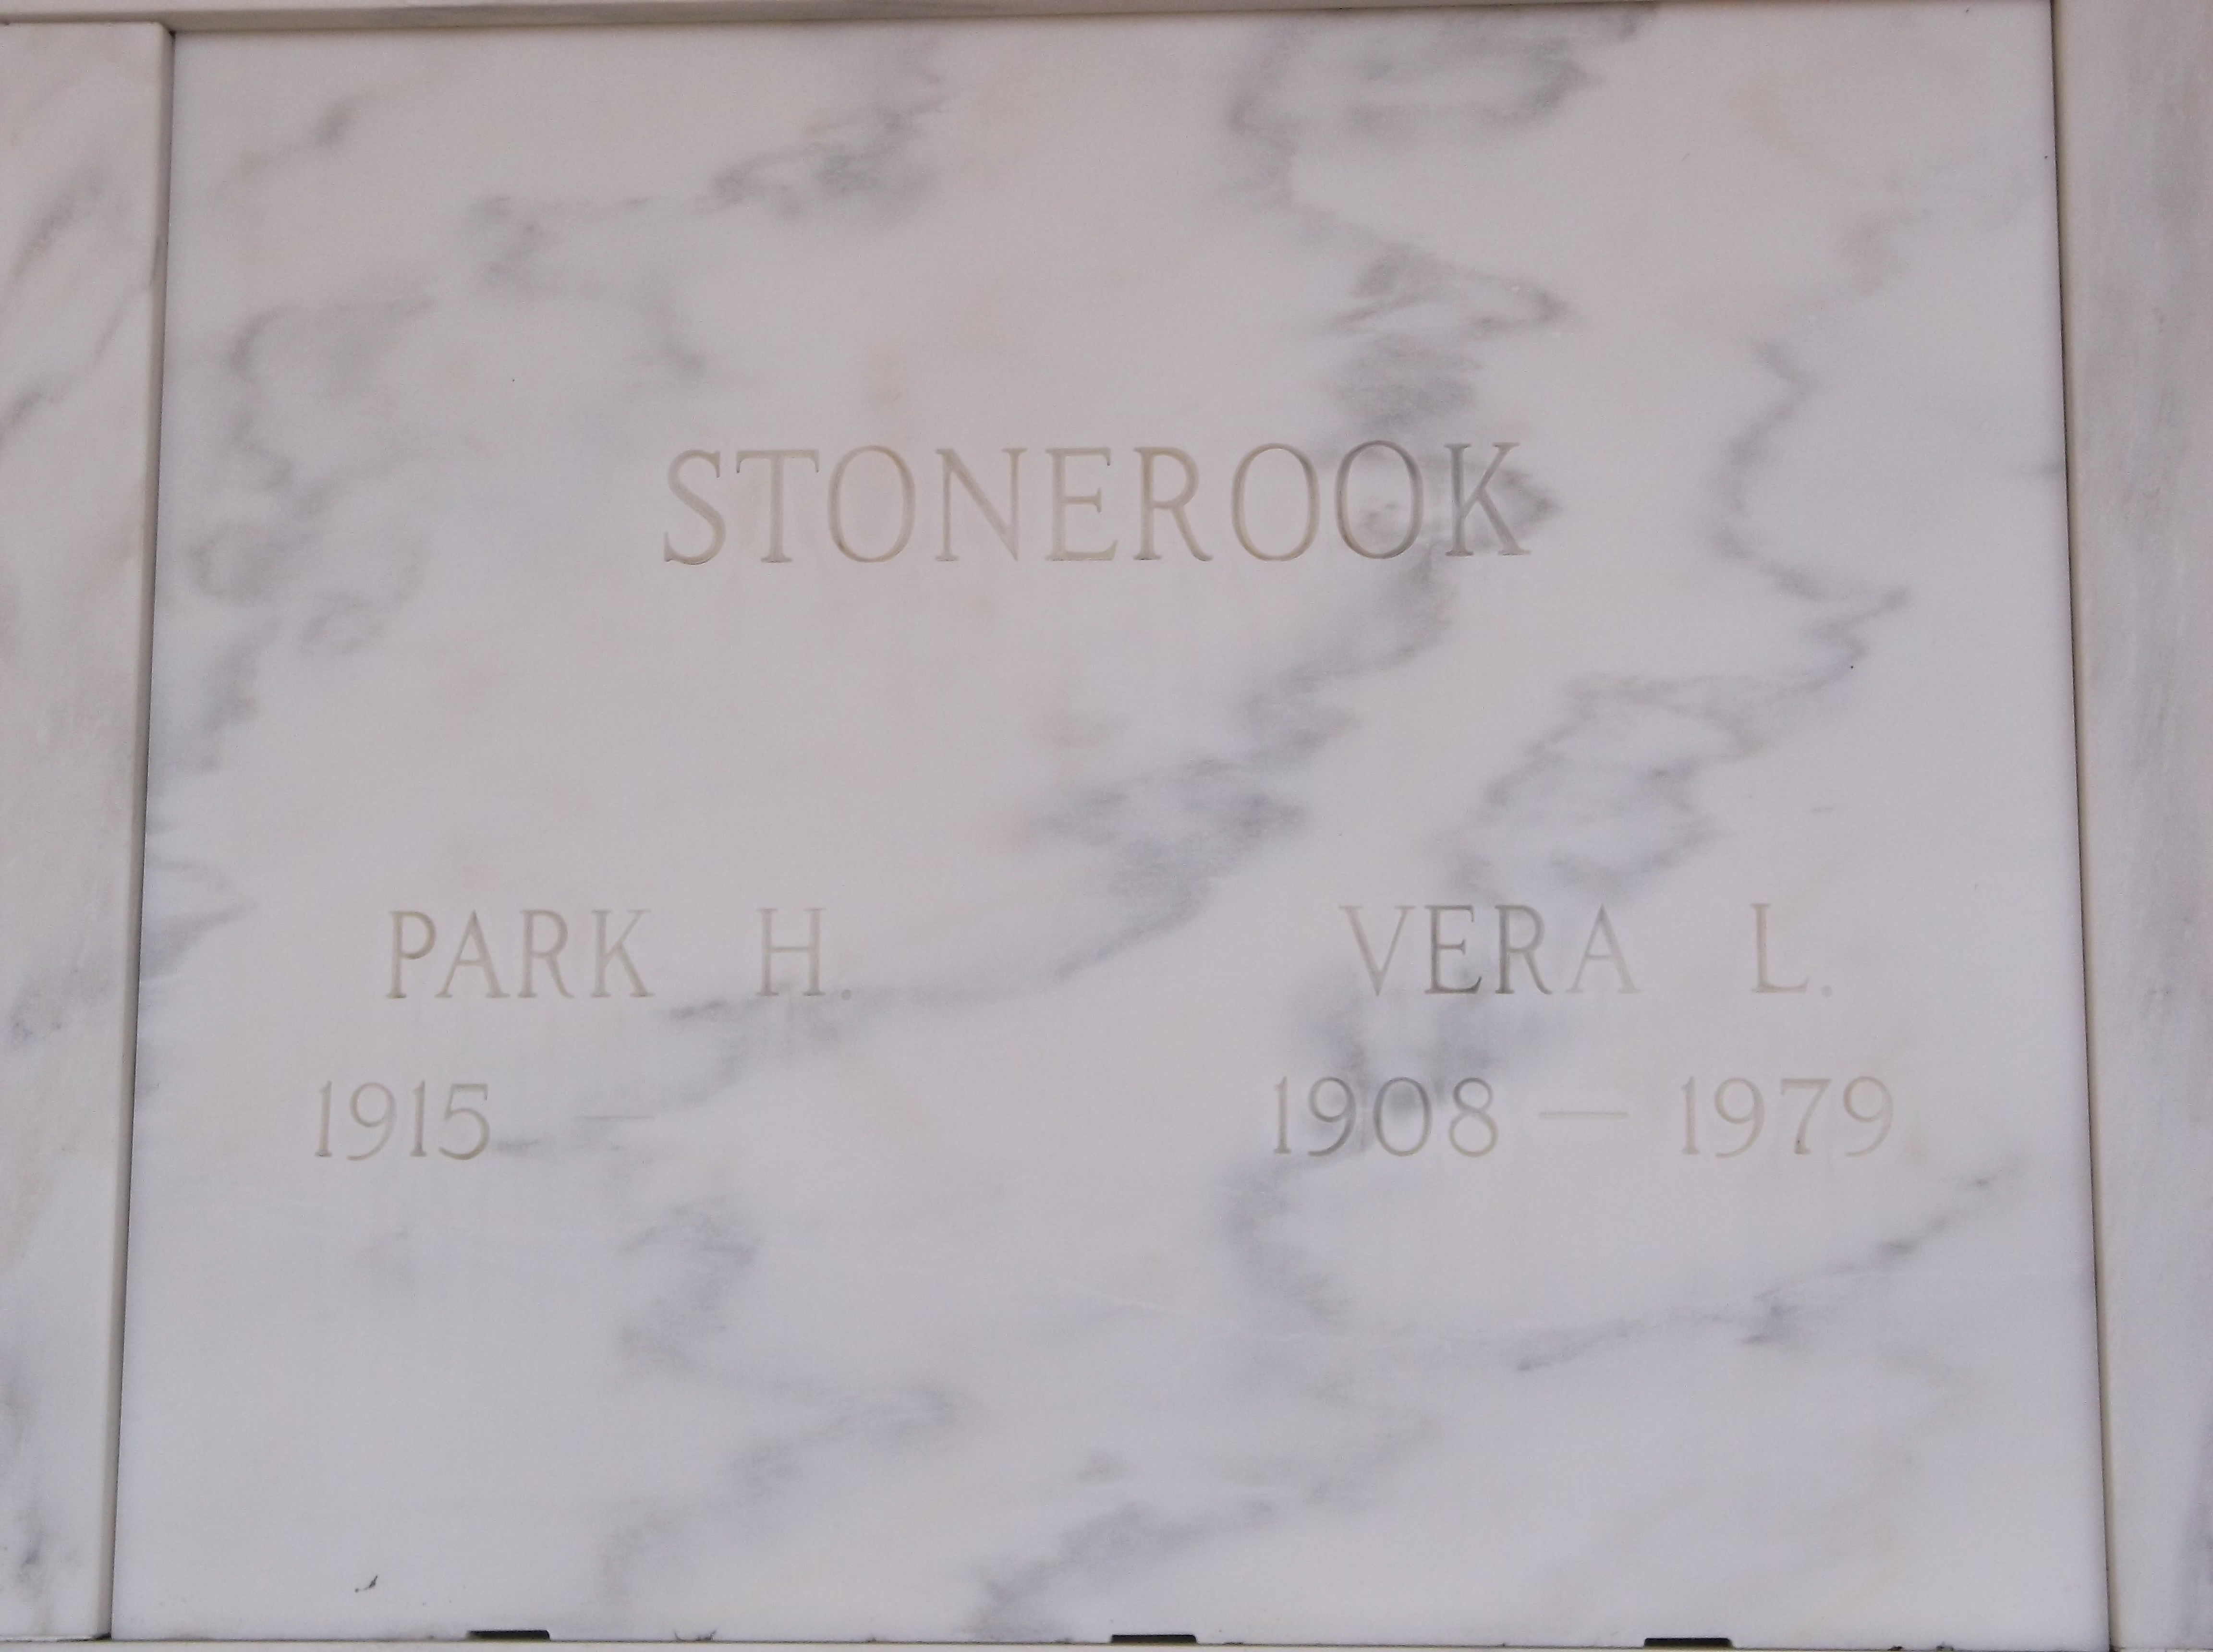 Park H Stonerook